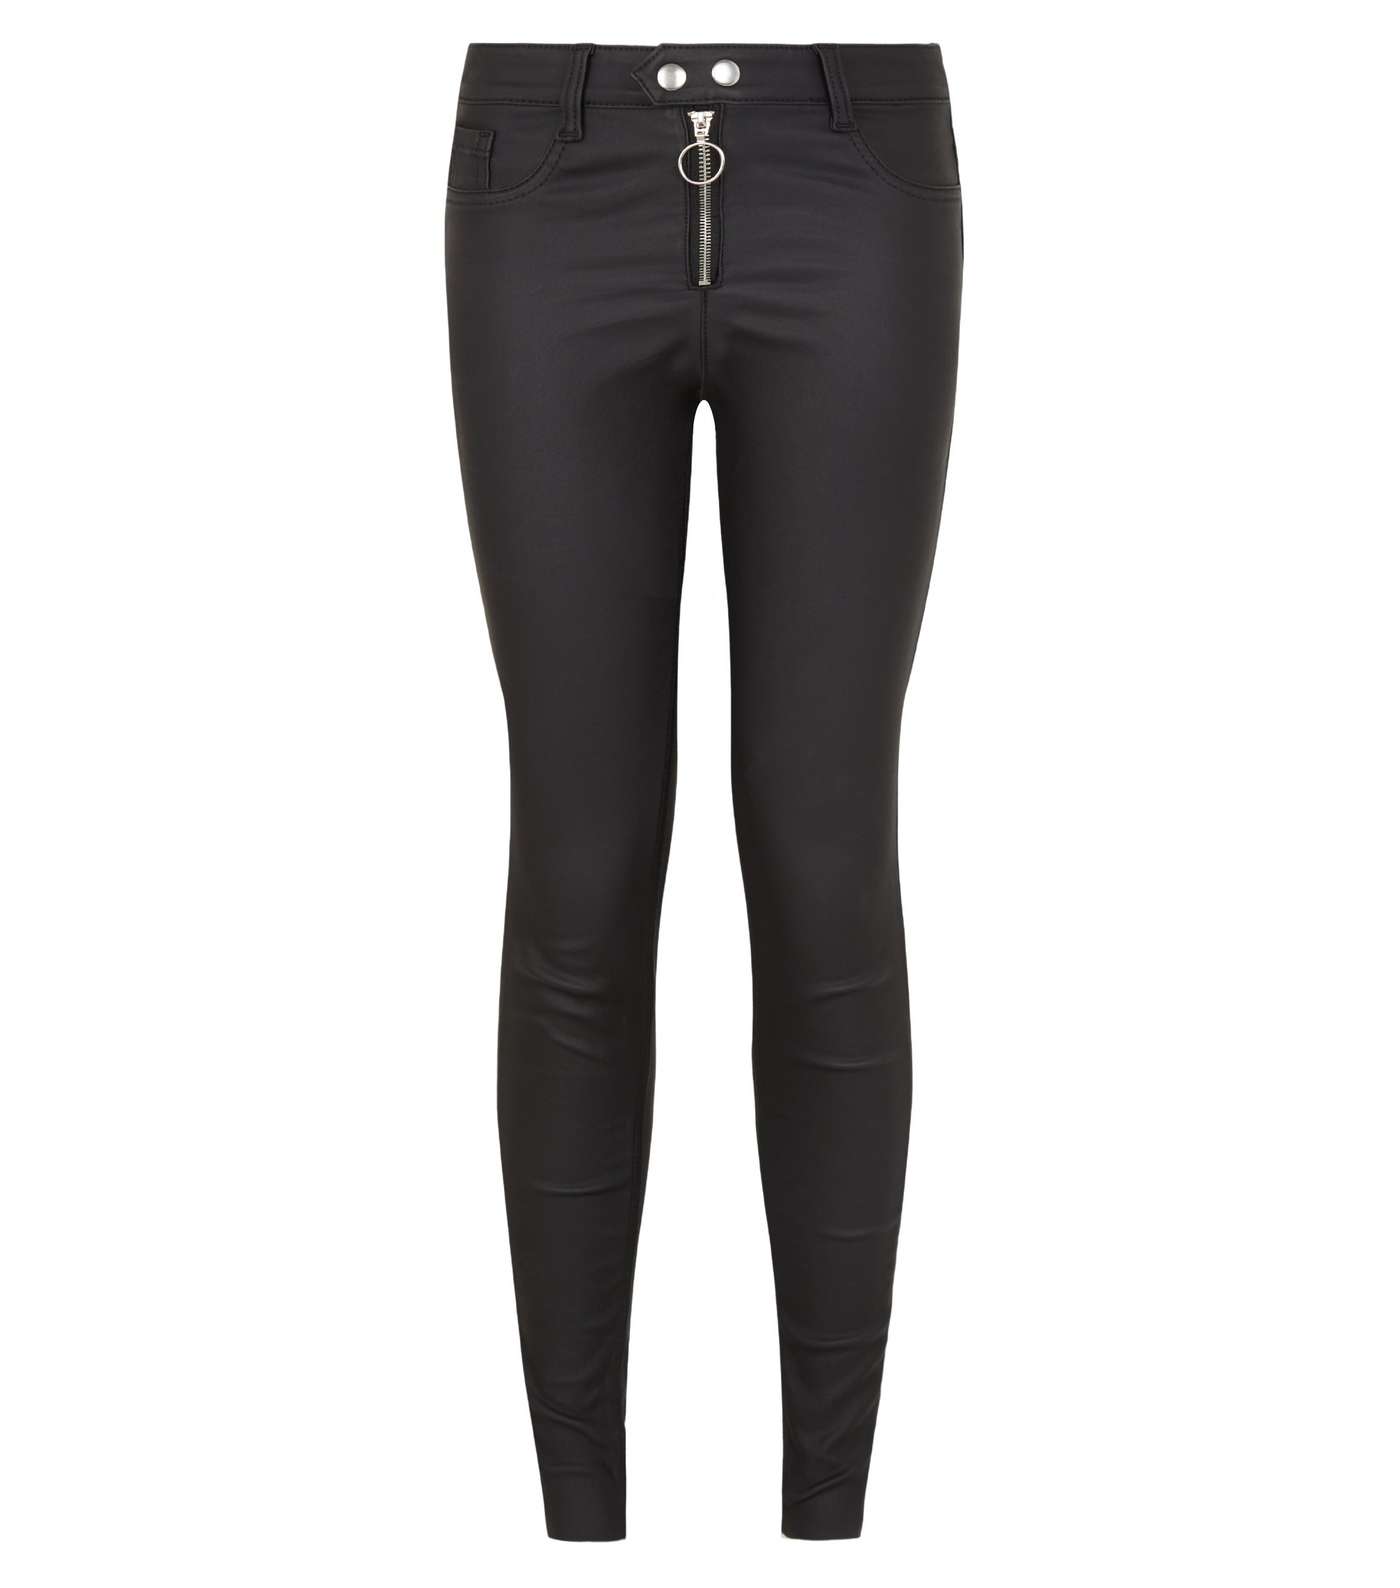 Girls Black Leather-Look High Waist Skinny Jeans Image 4